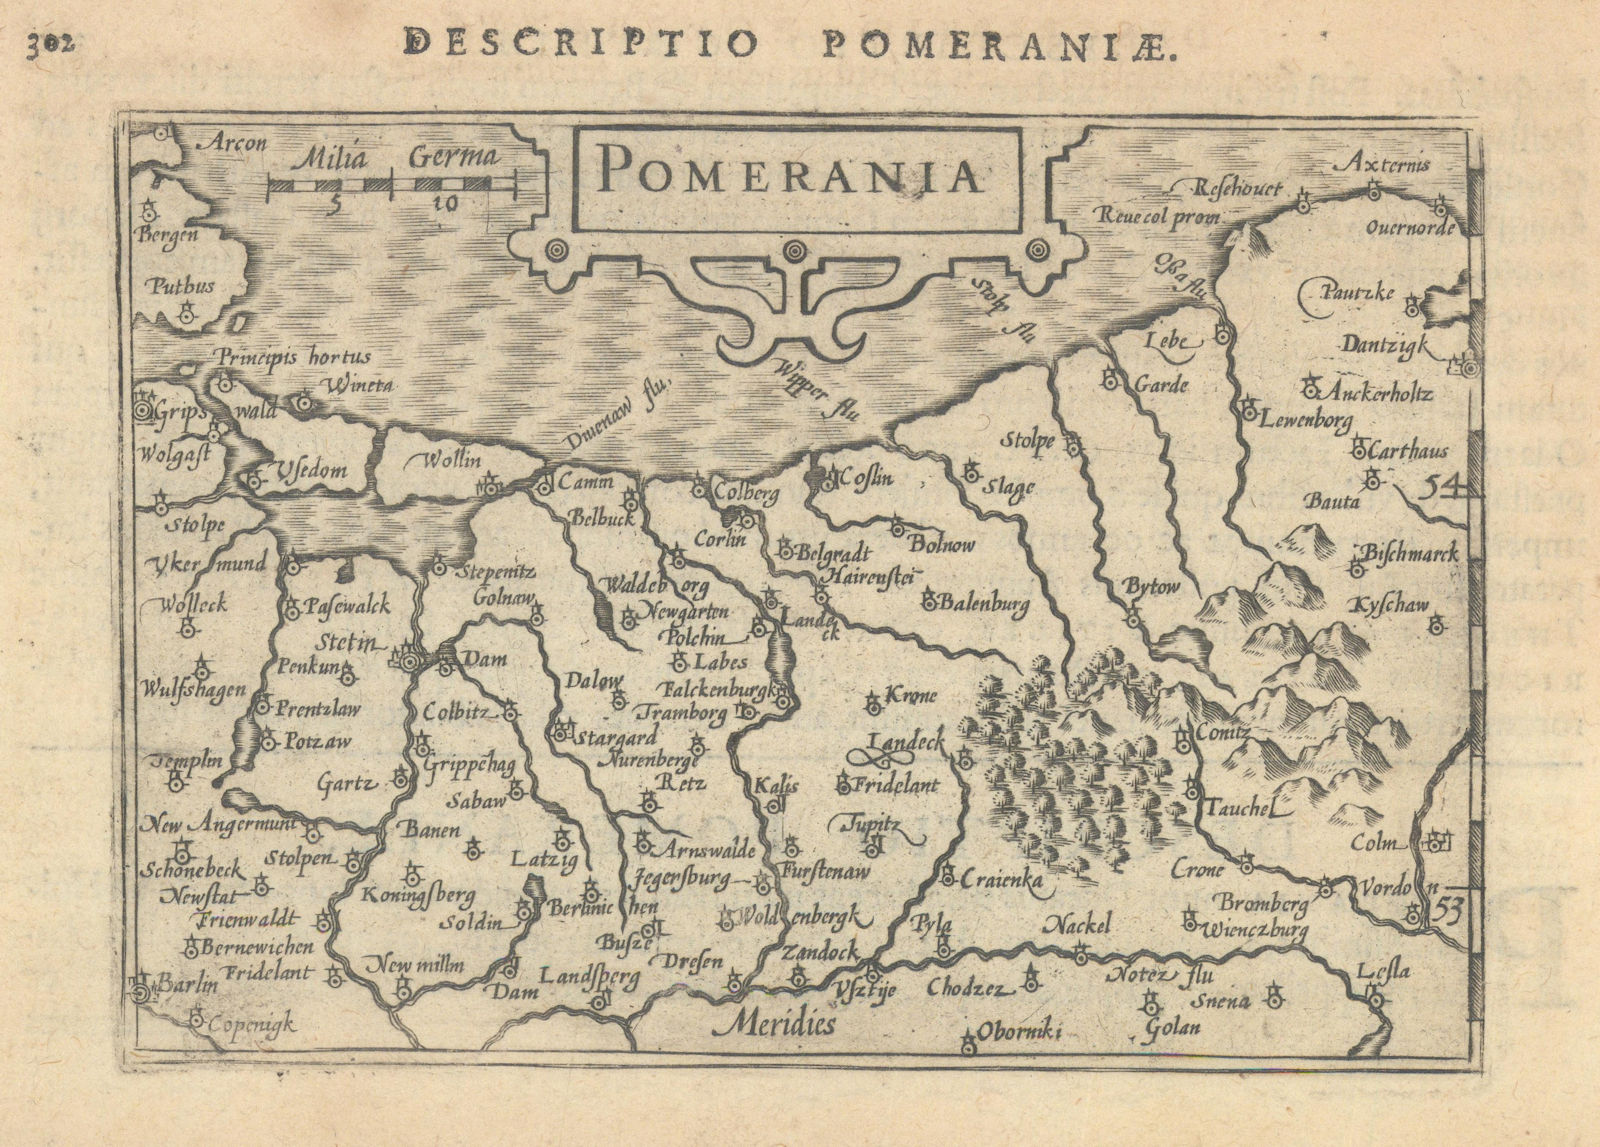 Pomeraniae / Pomerania by Bertius / Langenes. Pomerania. Germany Poland 1603 map